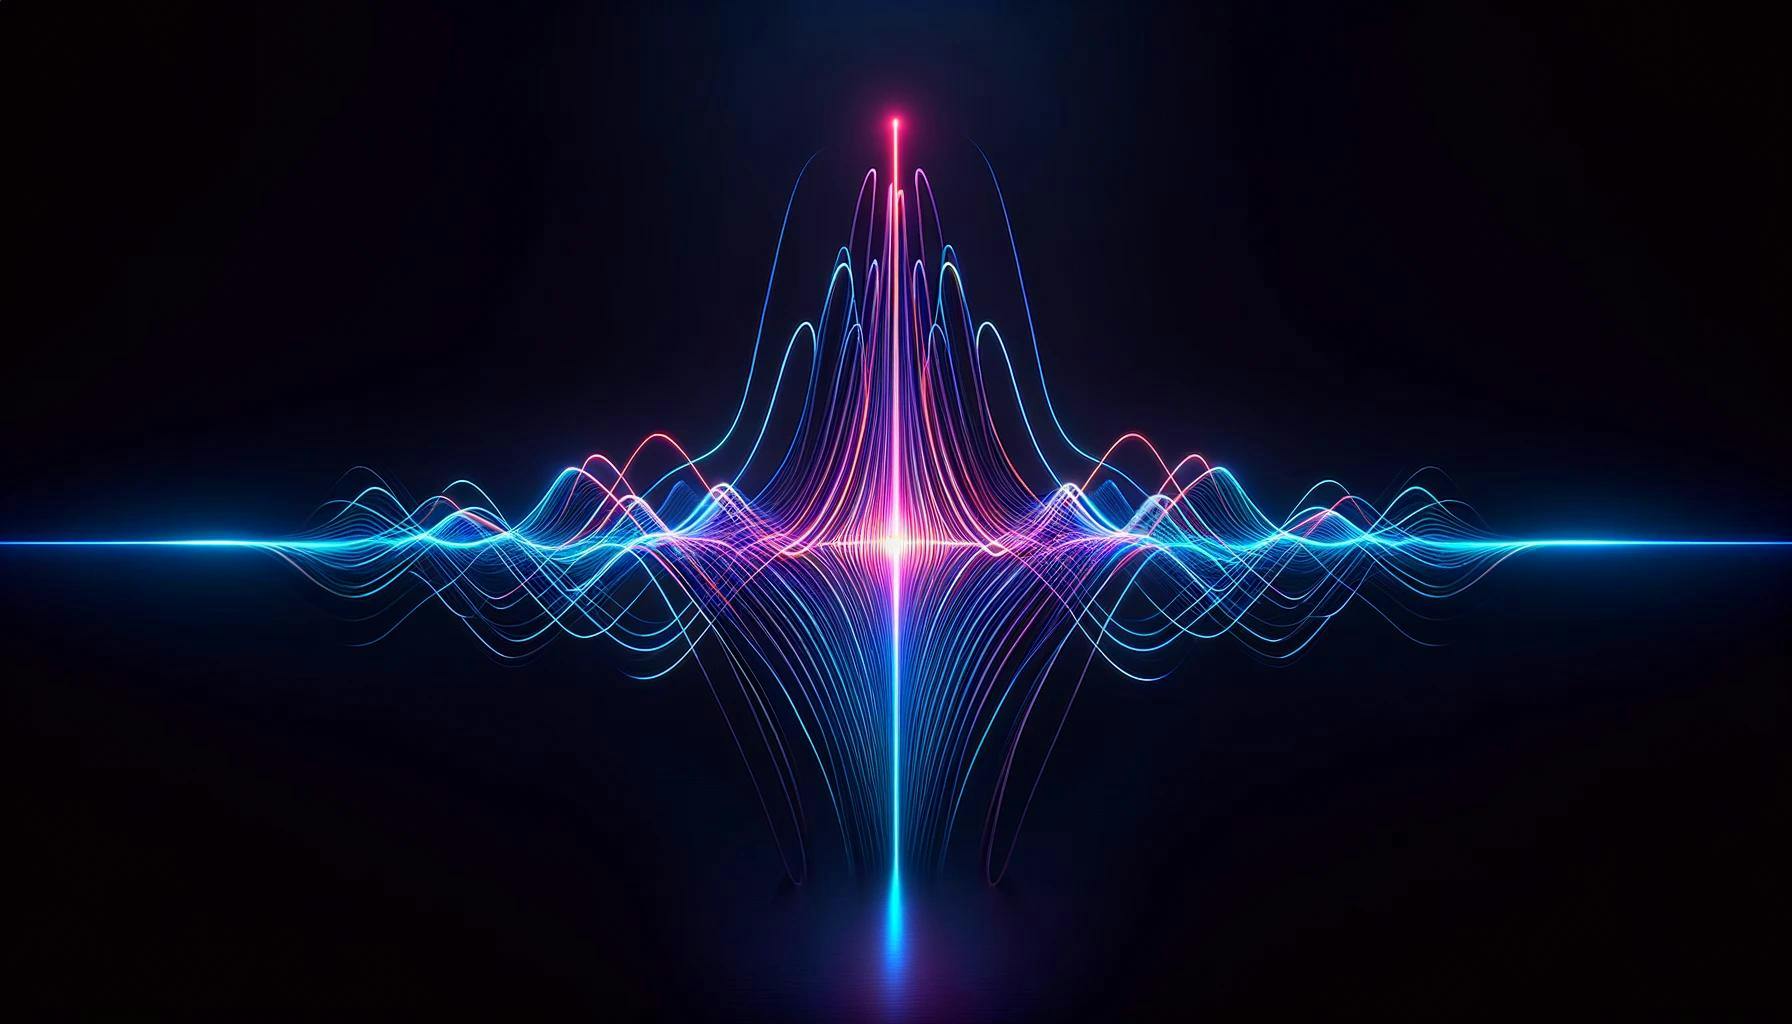 neon style sound image